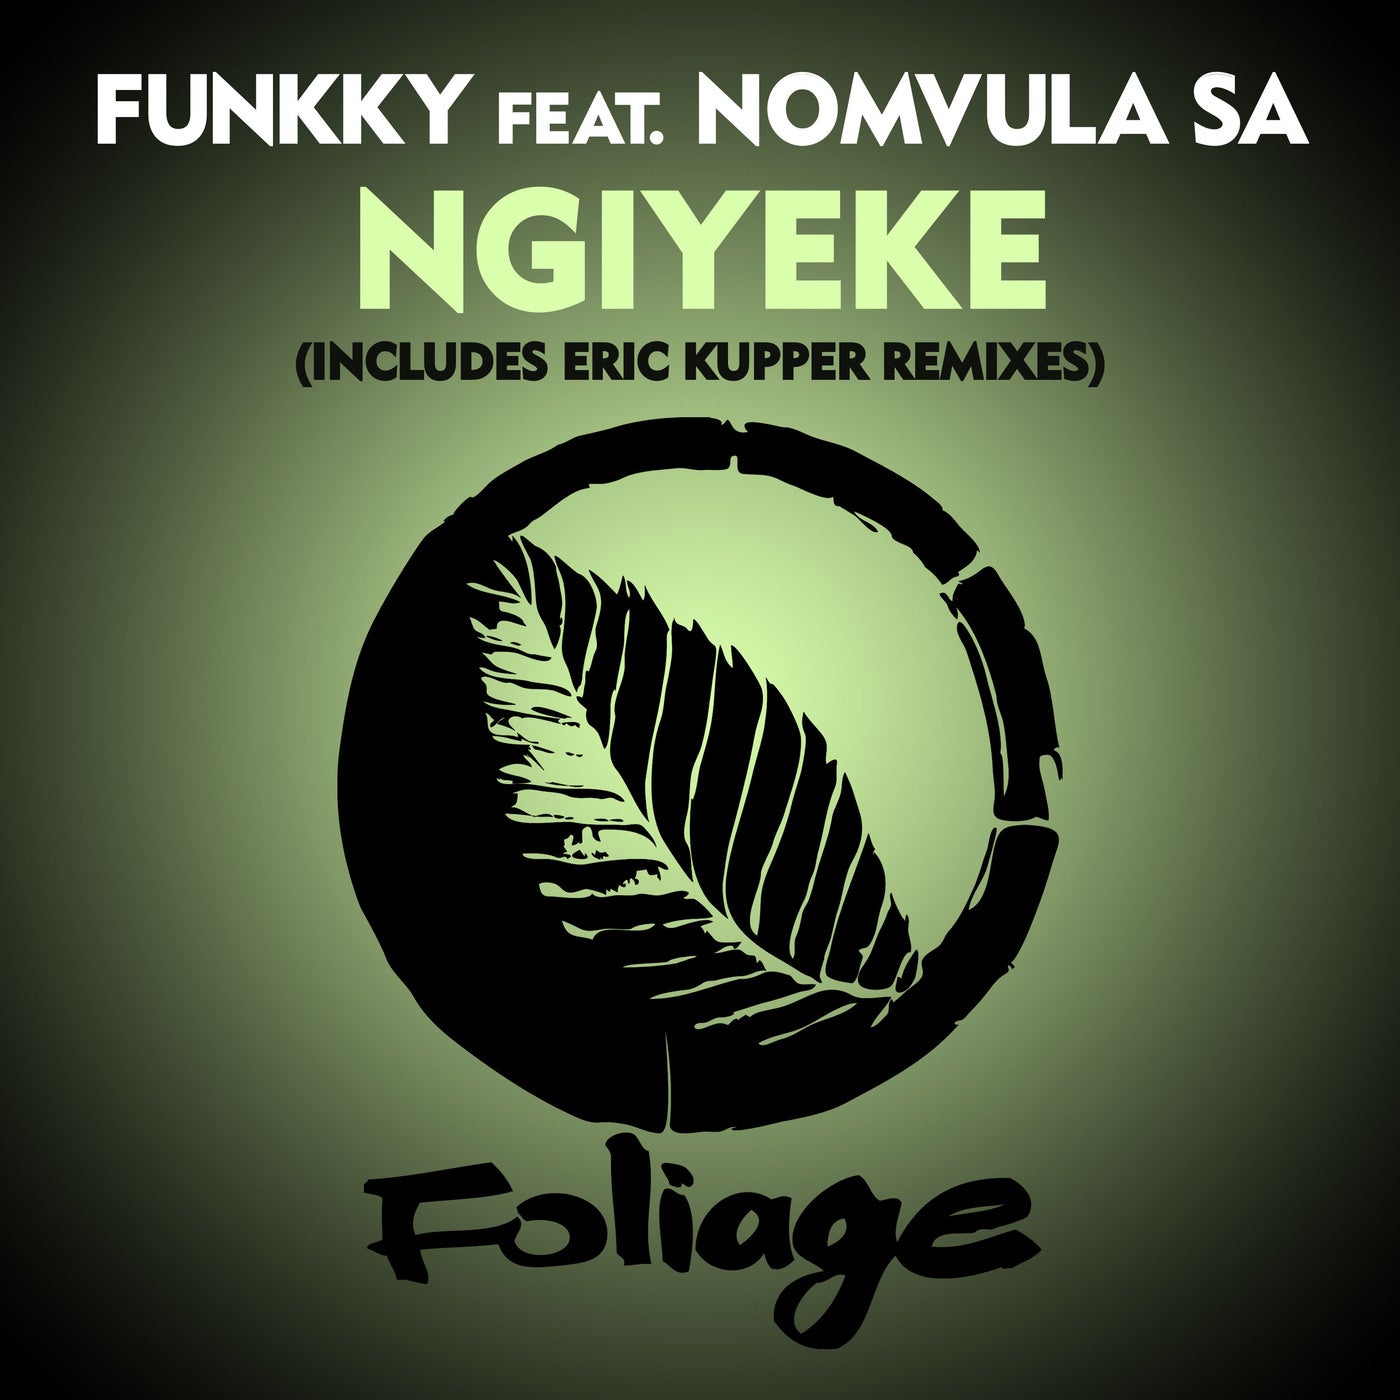 Ngiyeke - Includes Eric Kupper Remixes